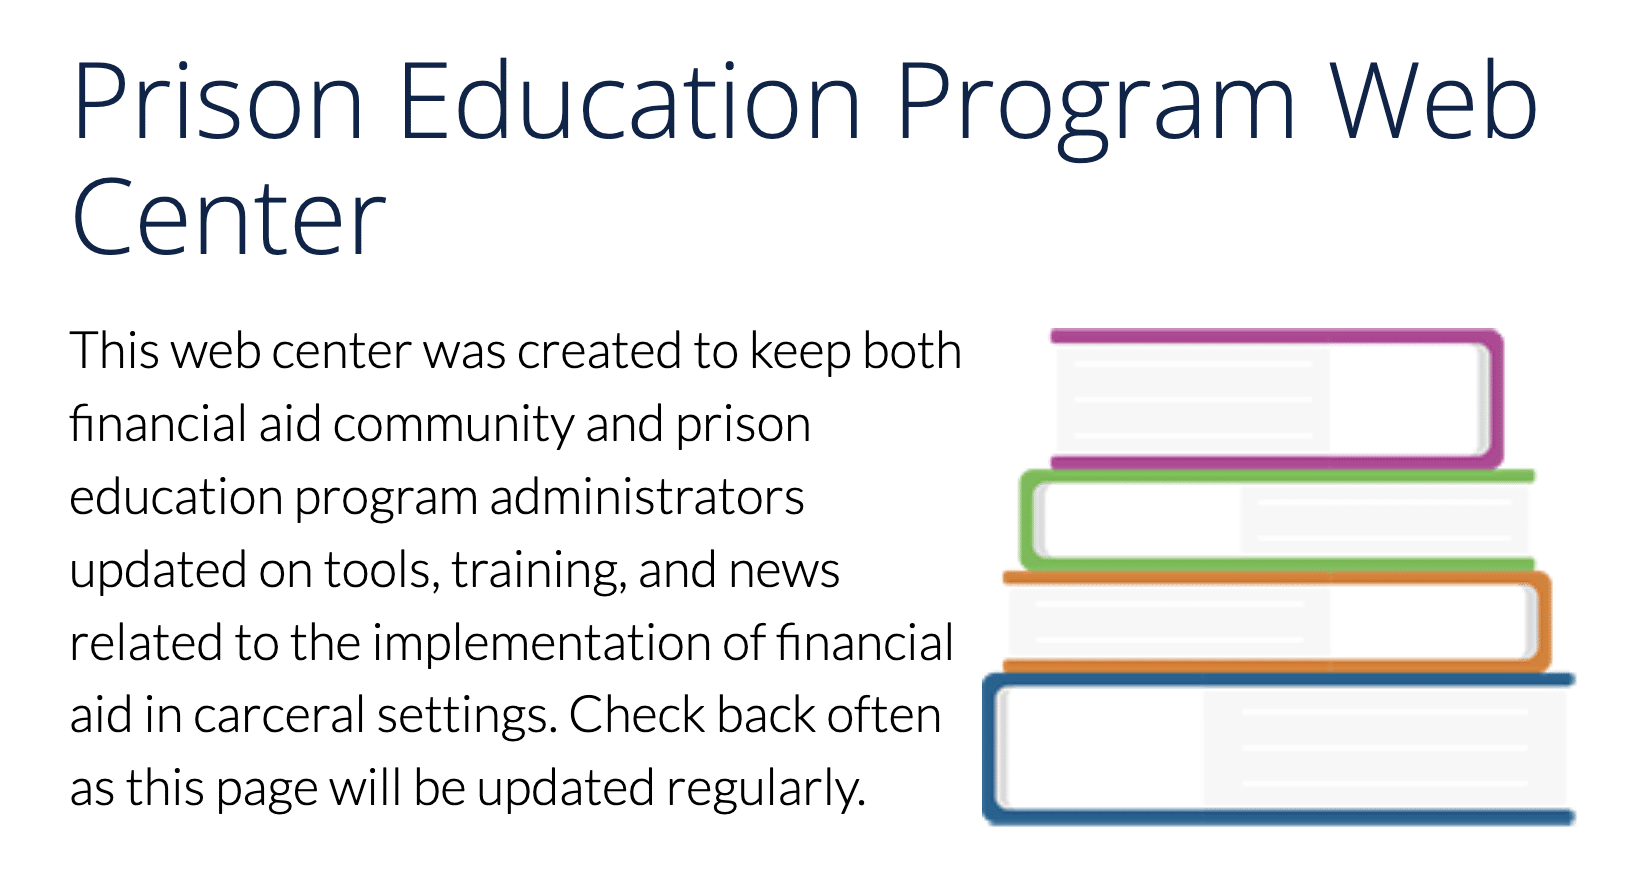 Prison Education Program Web Center